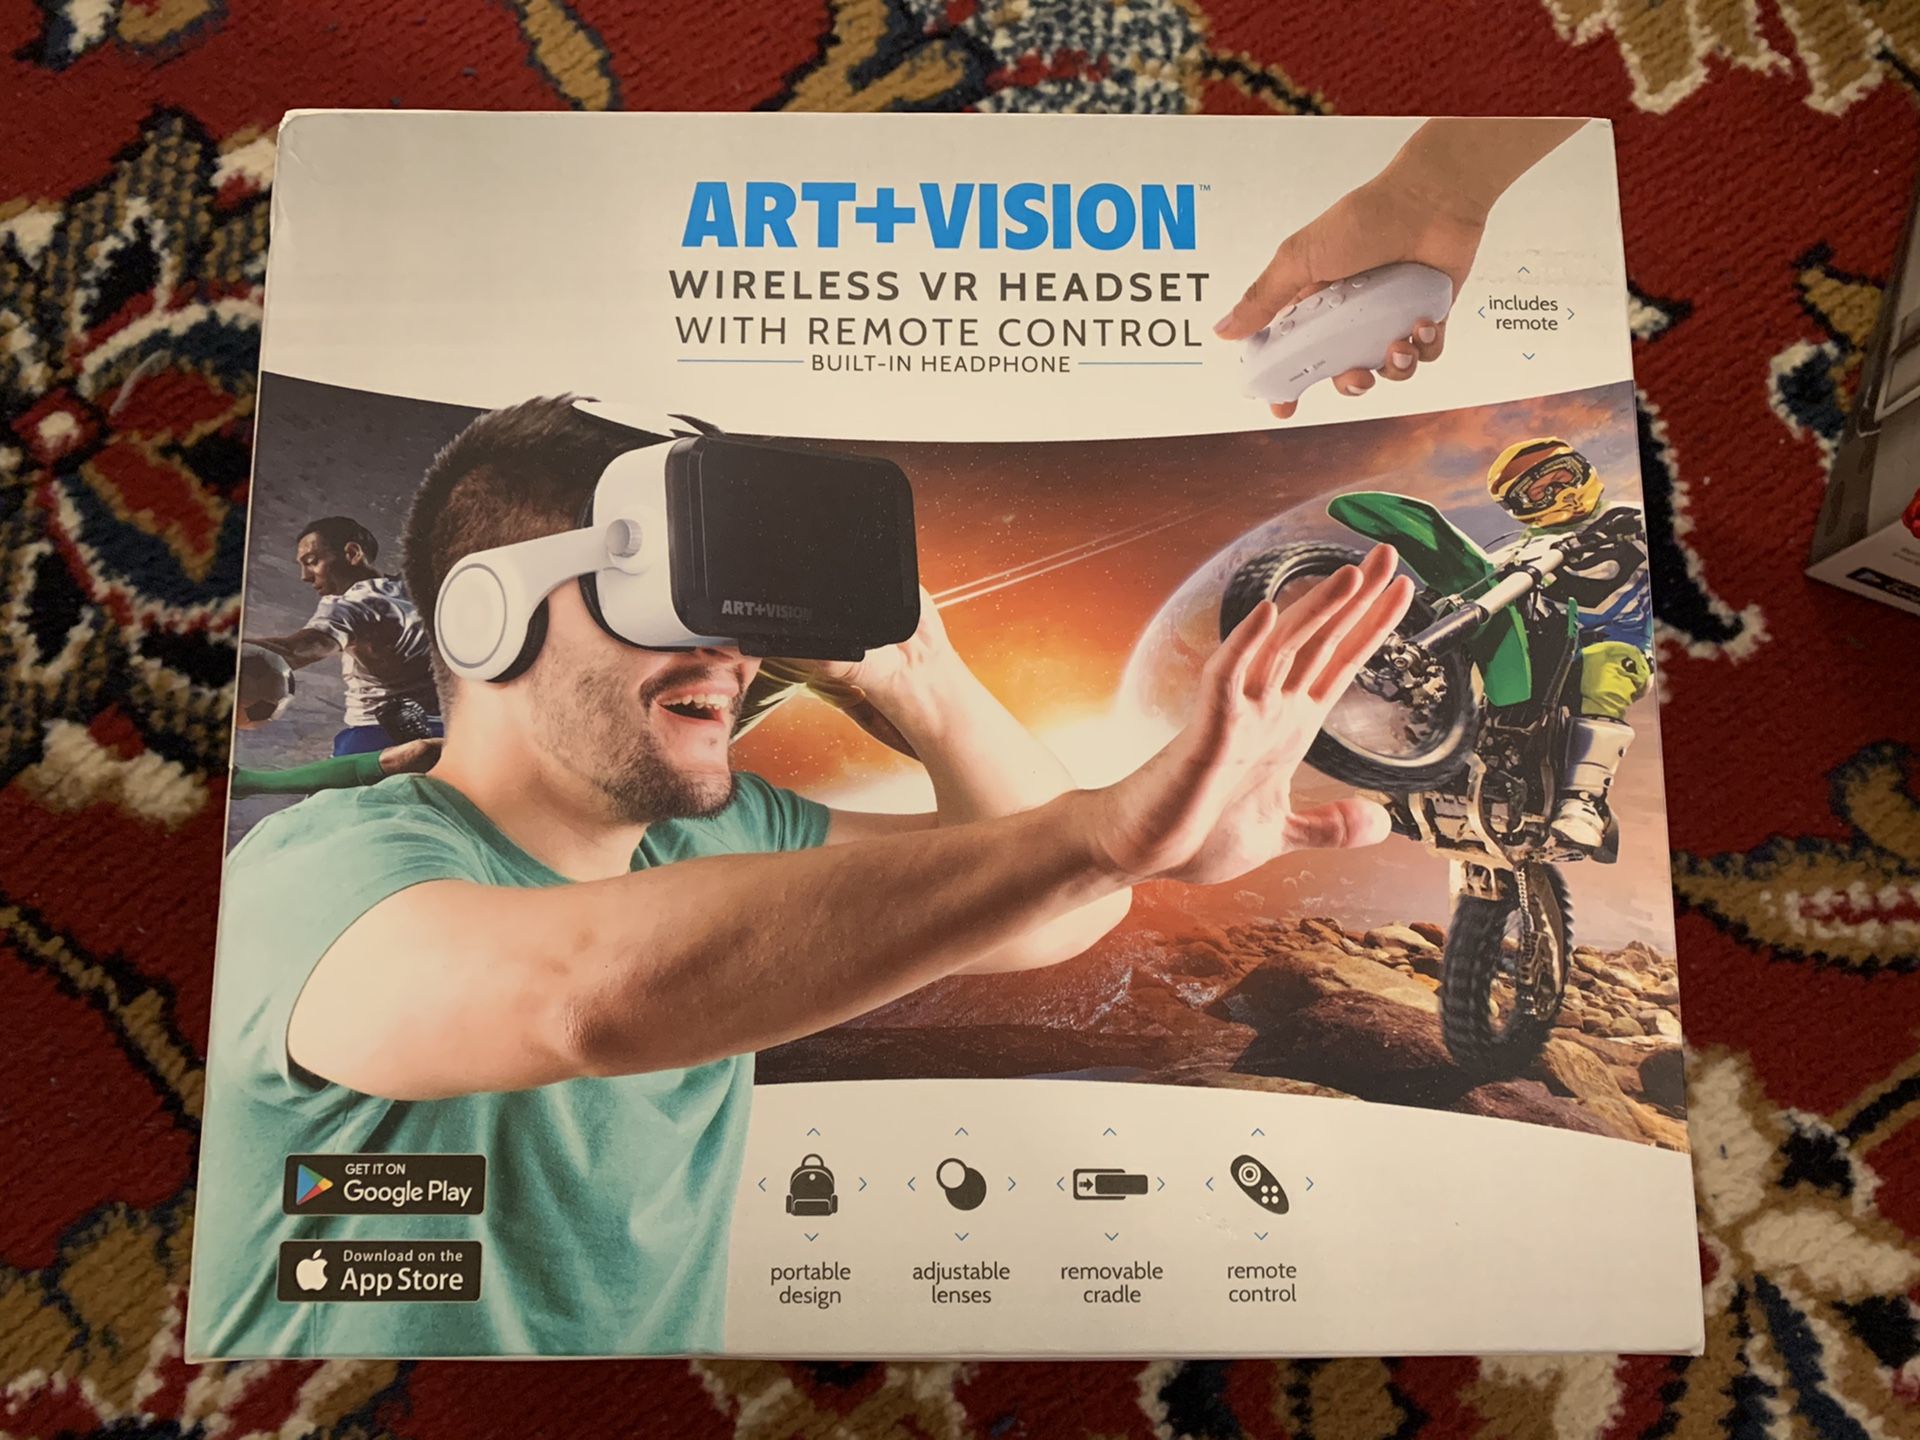 Brand new Art + Vision wireless VR Headset